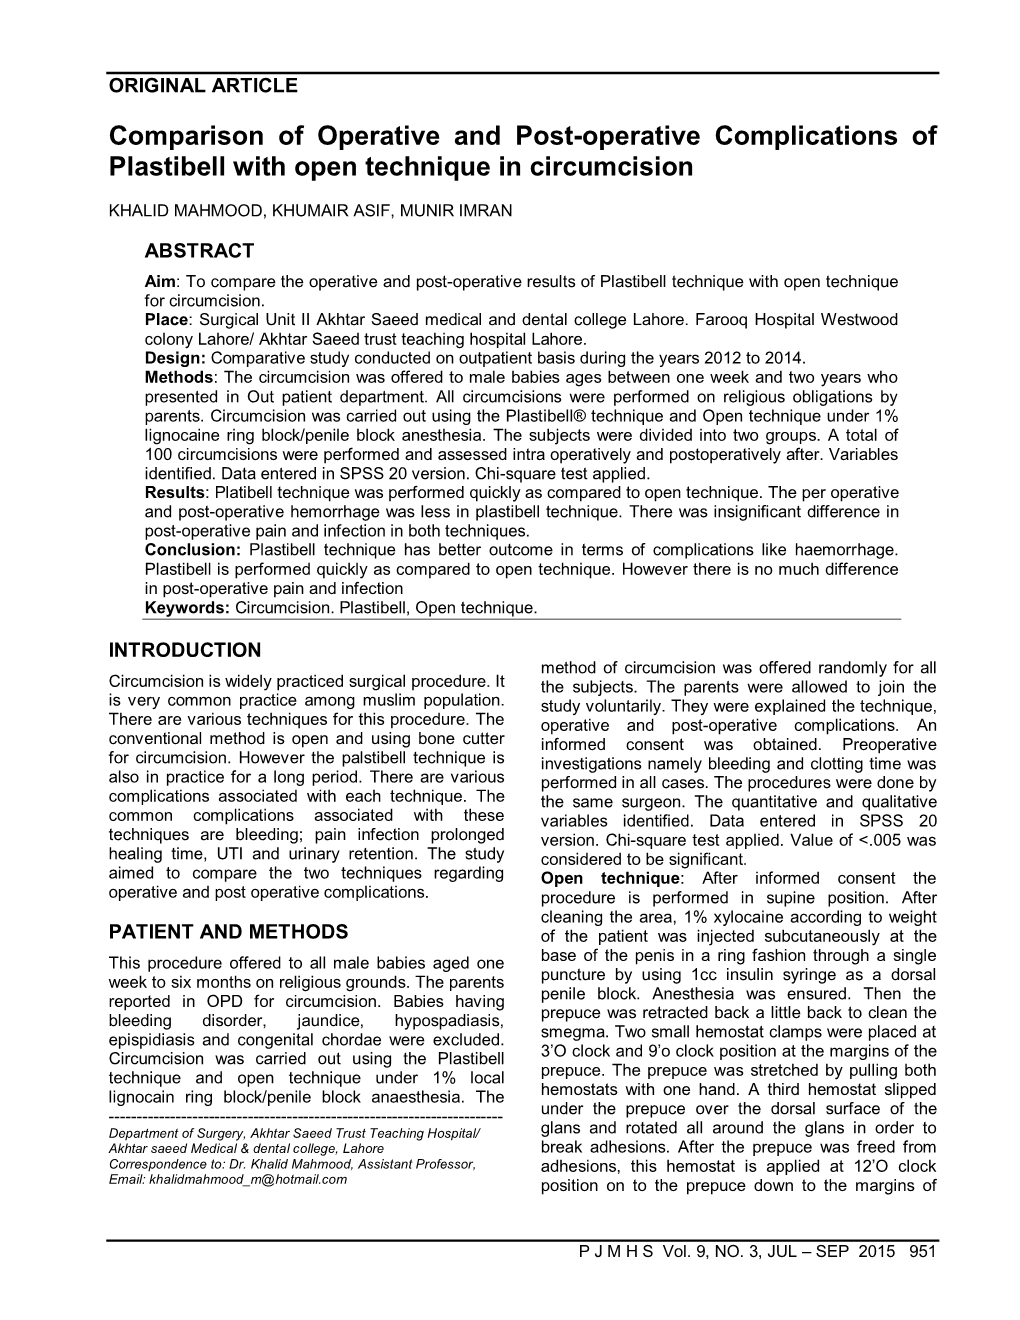 Comparison of Operative/Postop Complications of Plastibell with Open Technique in Circumcision